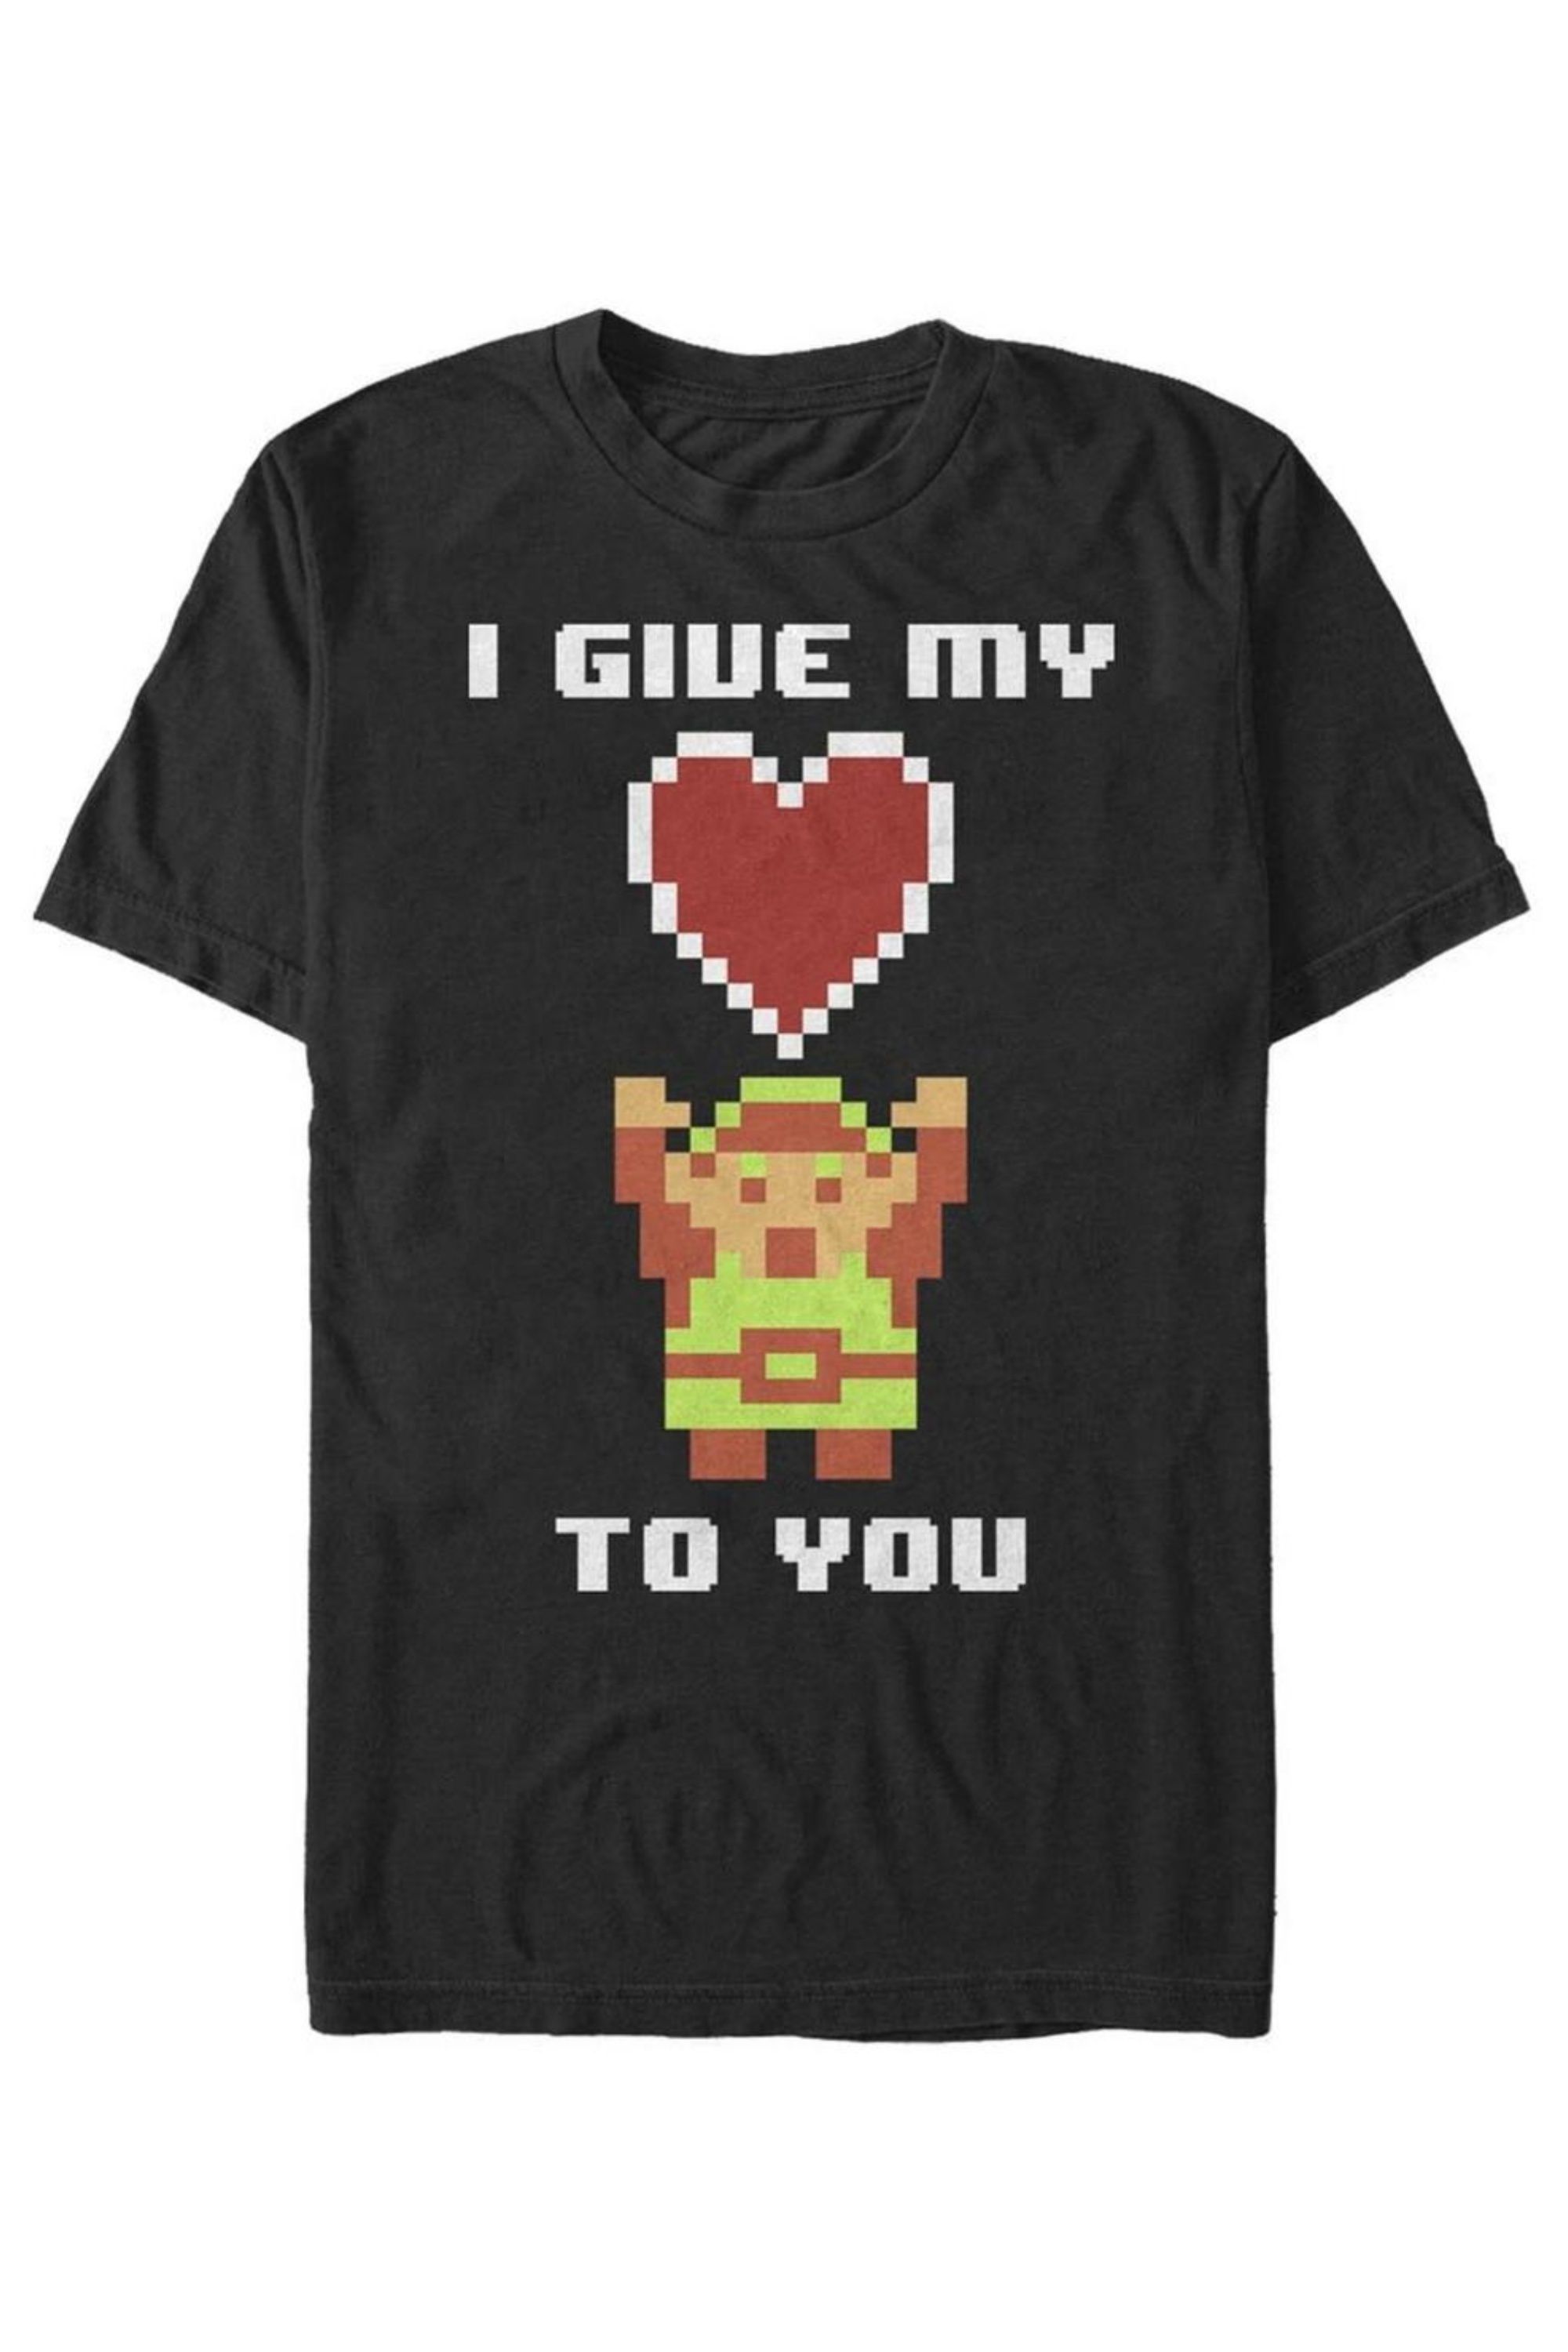 The Legend of Zelda Link Give My Heart T-Shirt